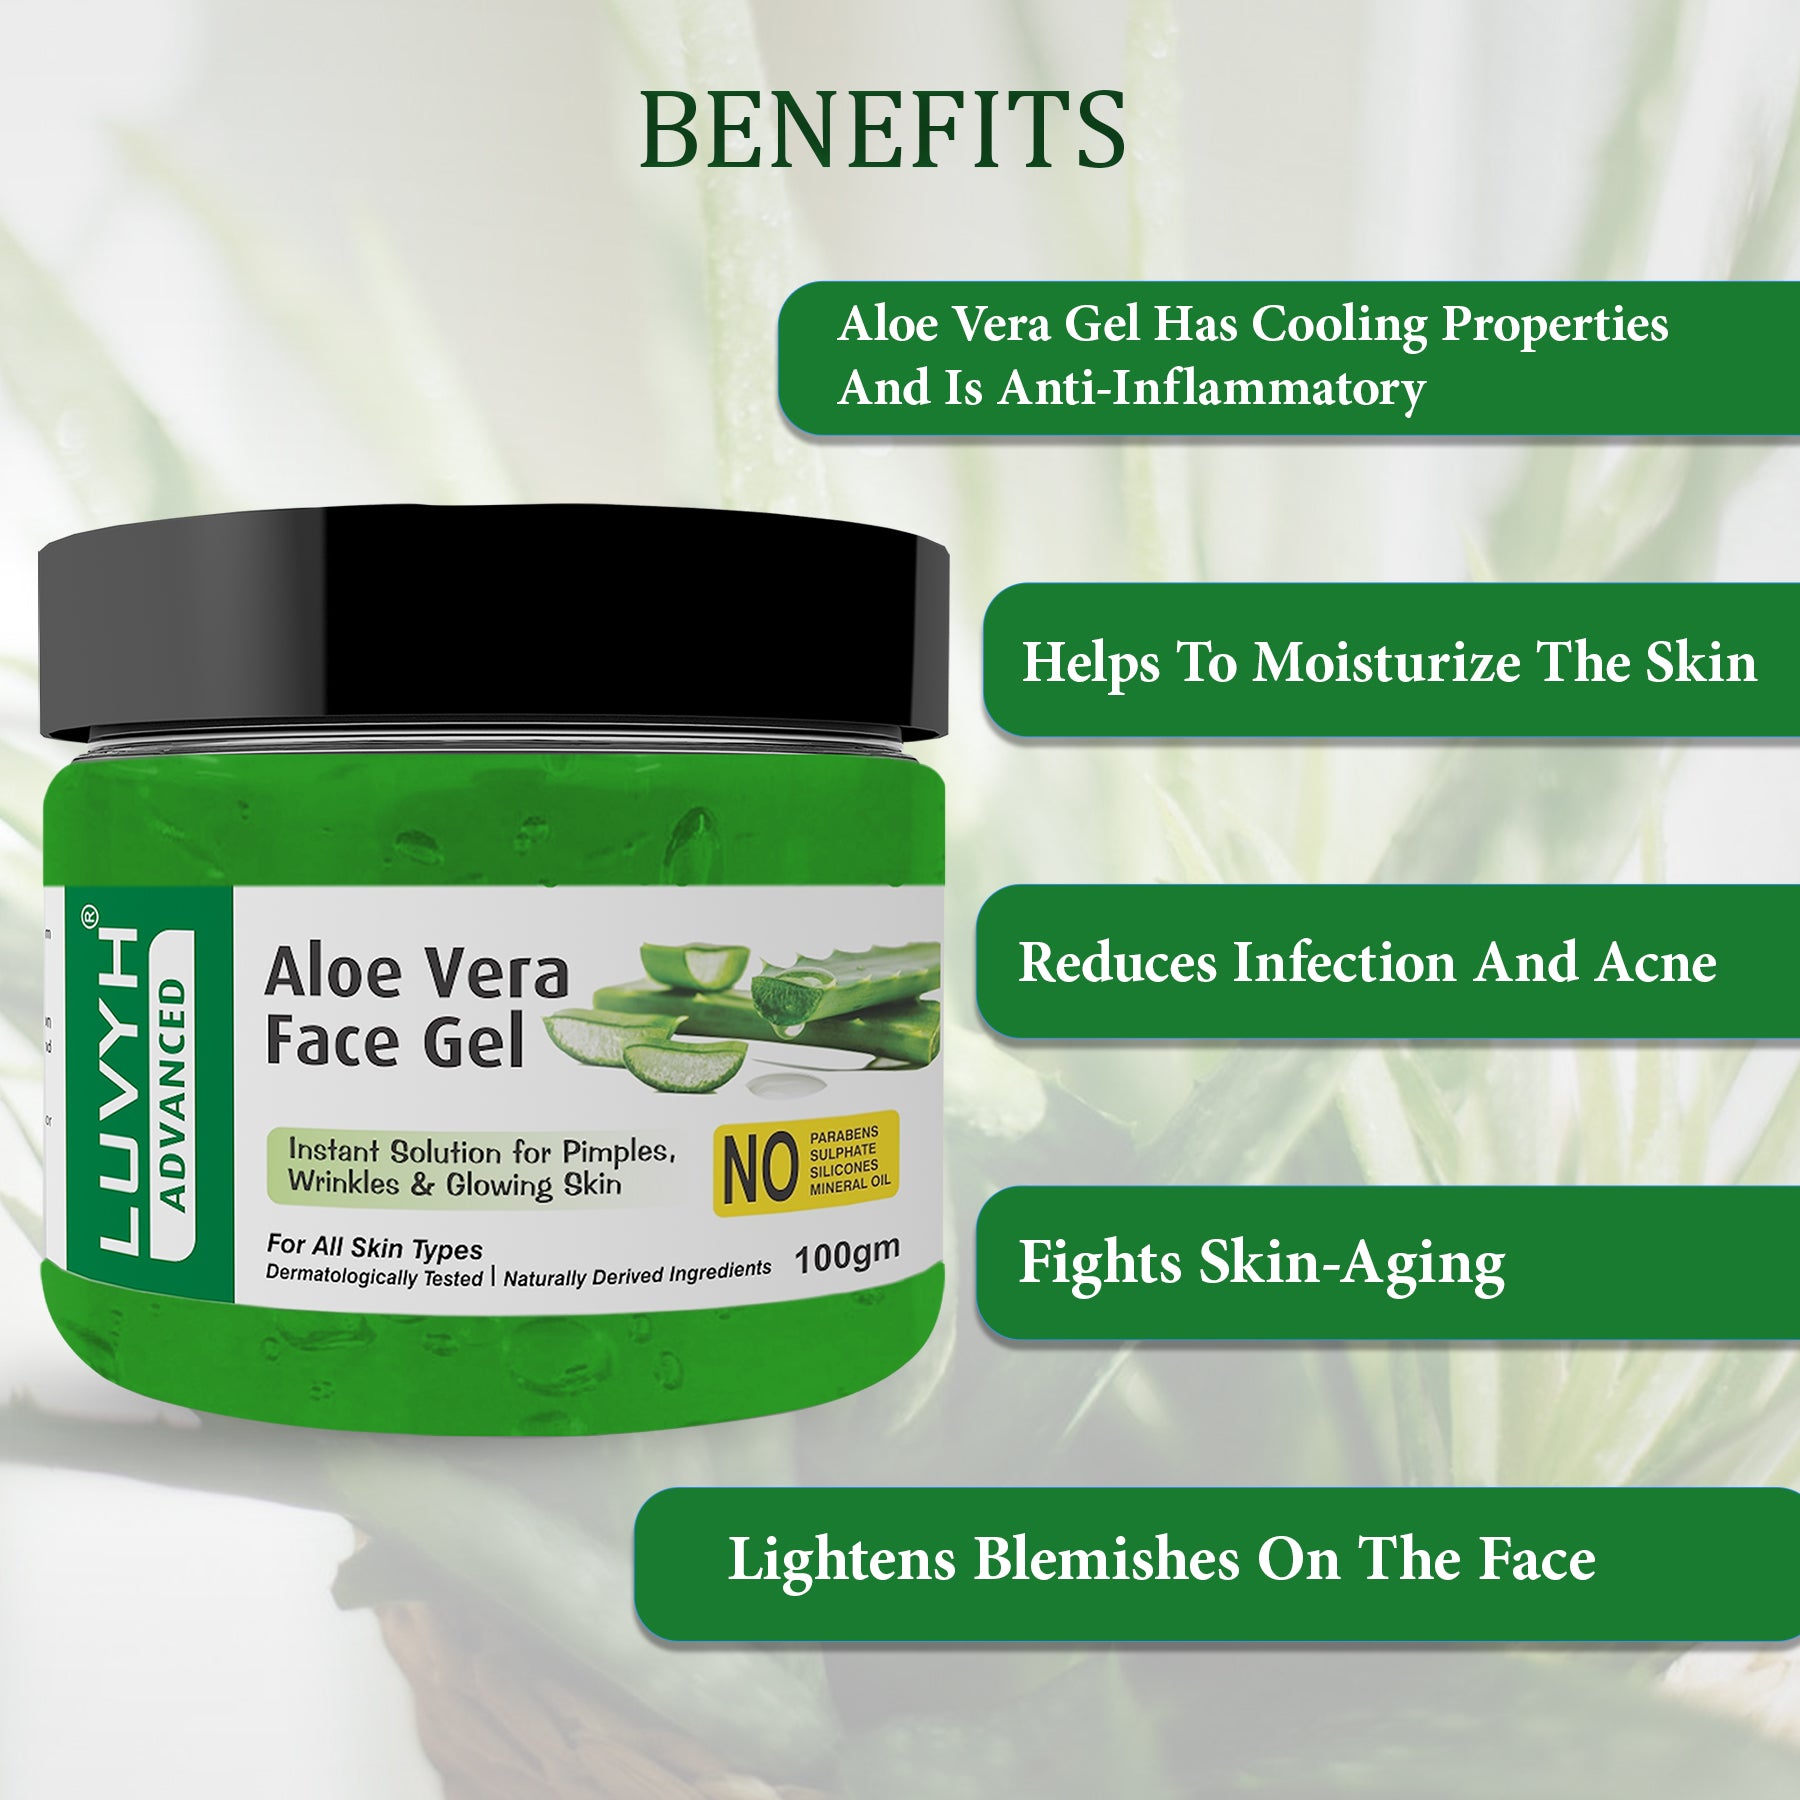 Benefits of Aloe Vera Face Gel